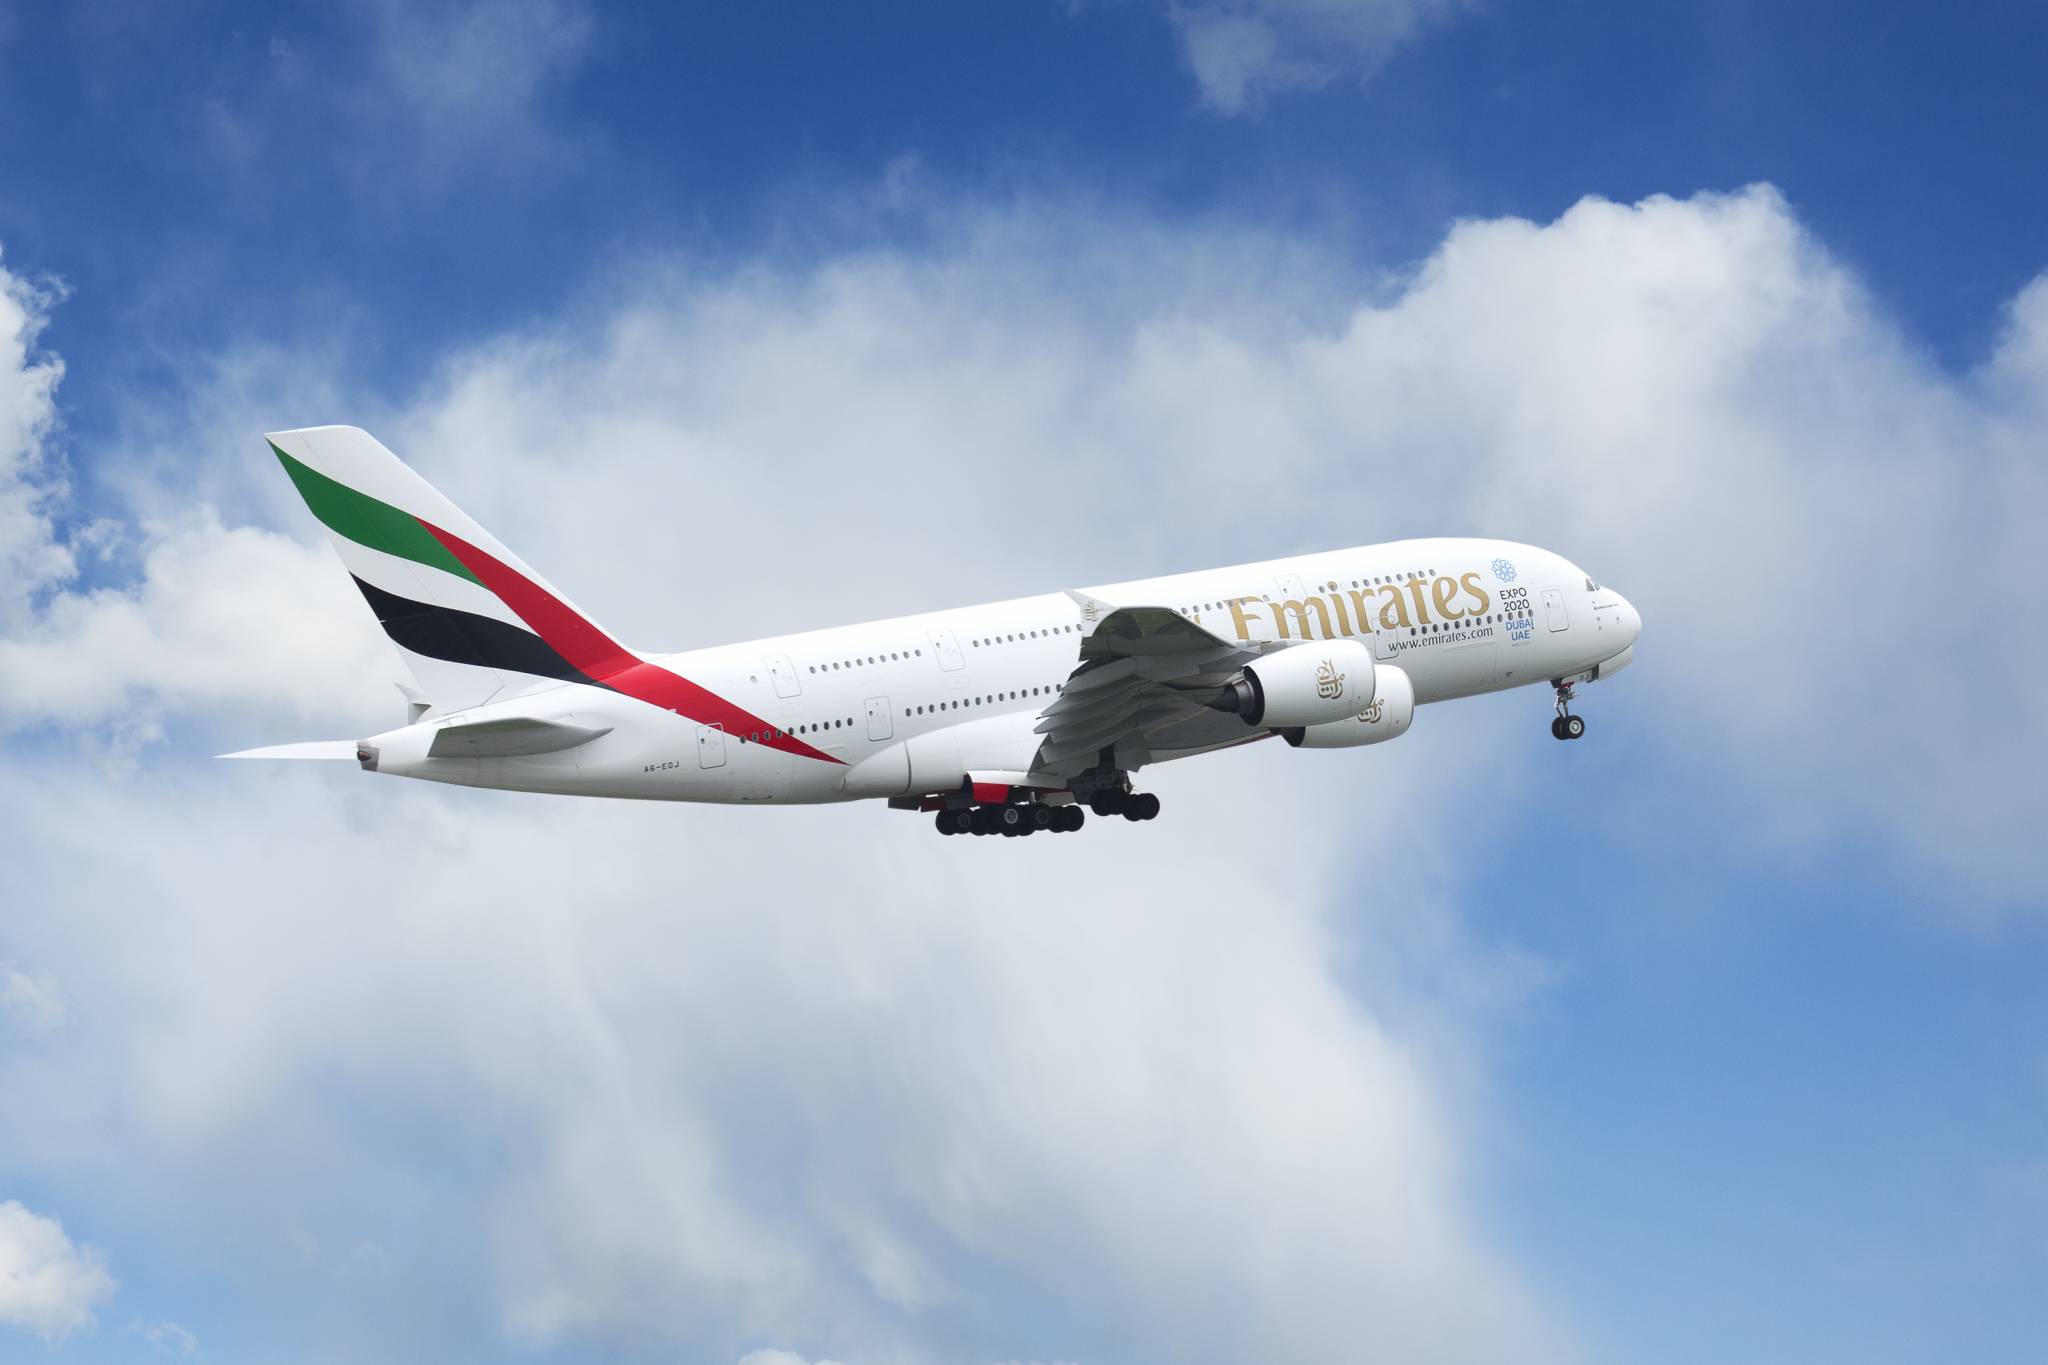 Emirates Skywards